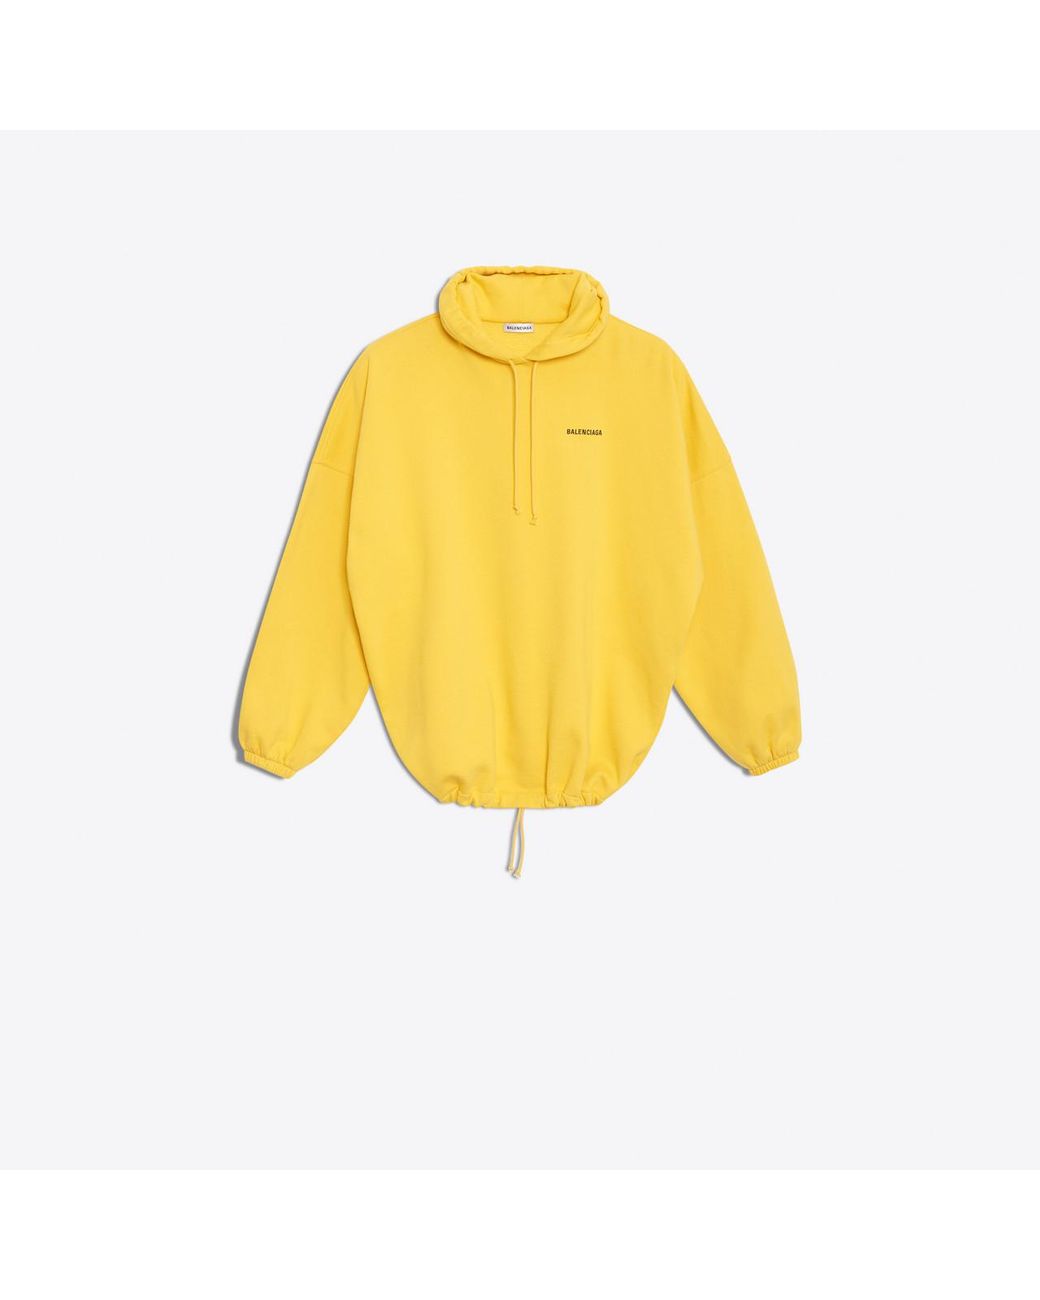 Balenciaga '®' Oversize Hoodie Cardigan in Yellow | Lyst